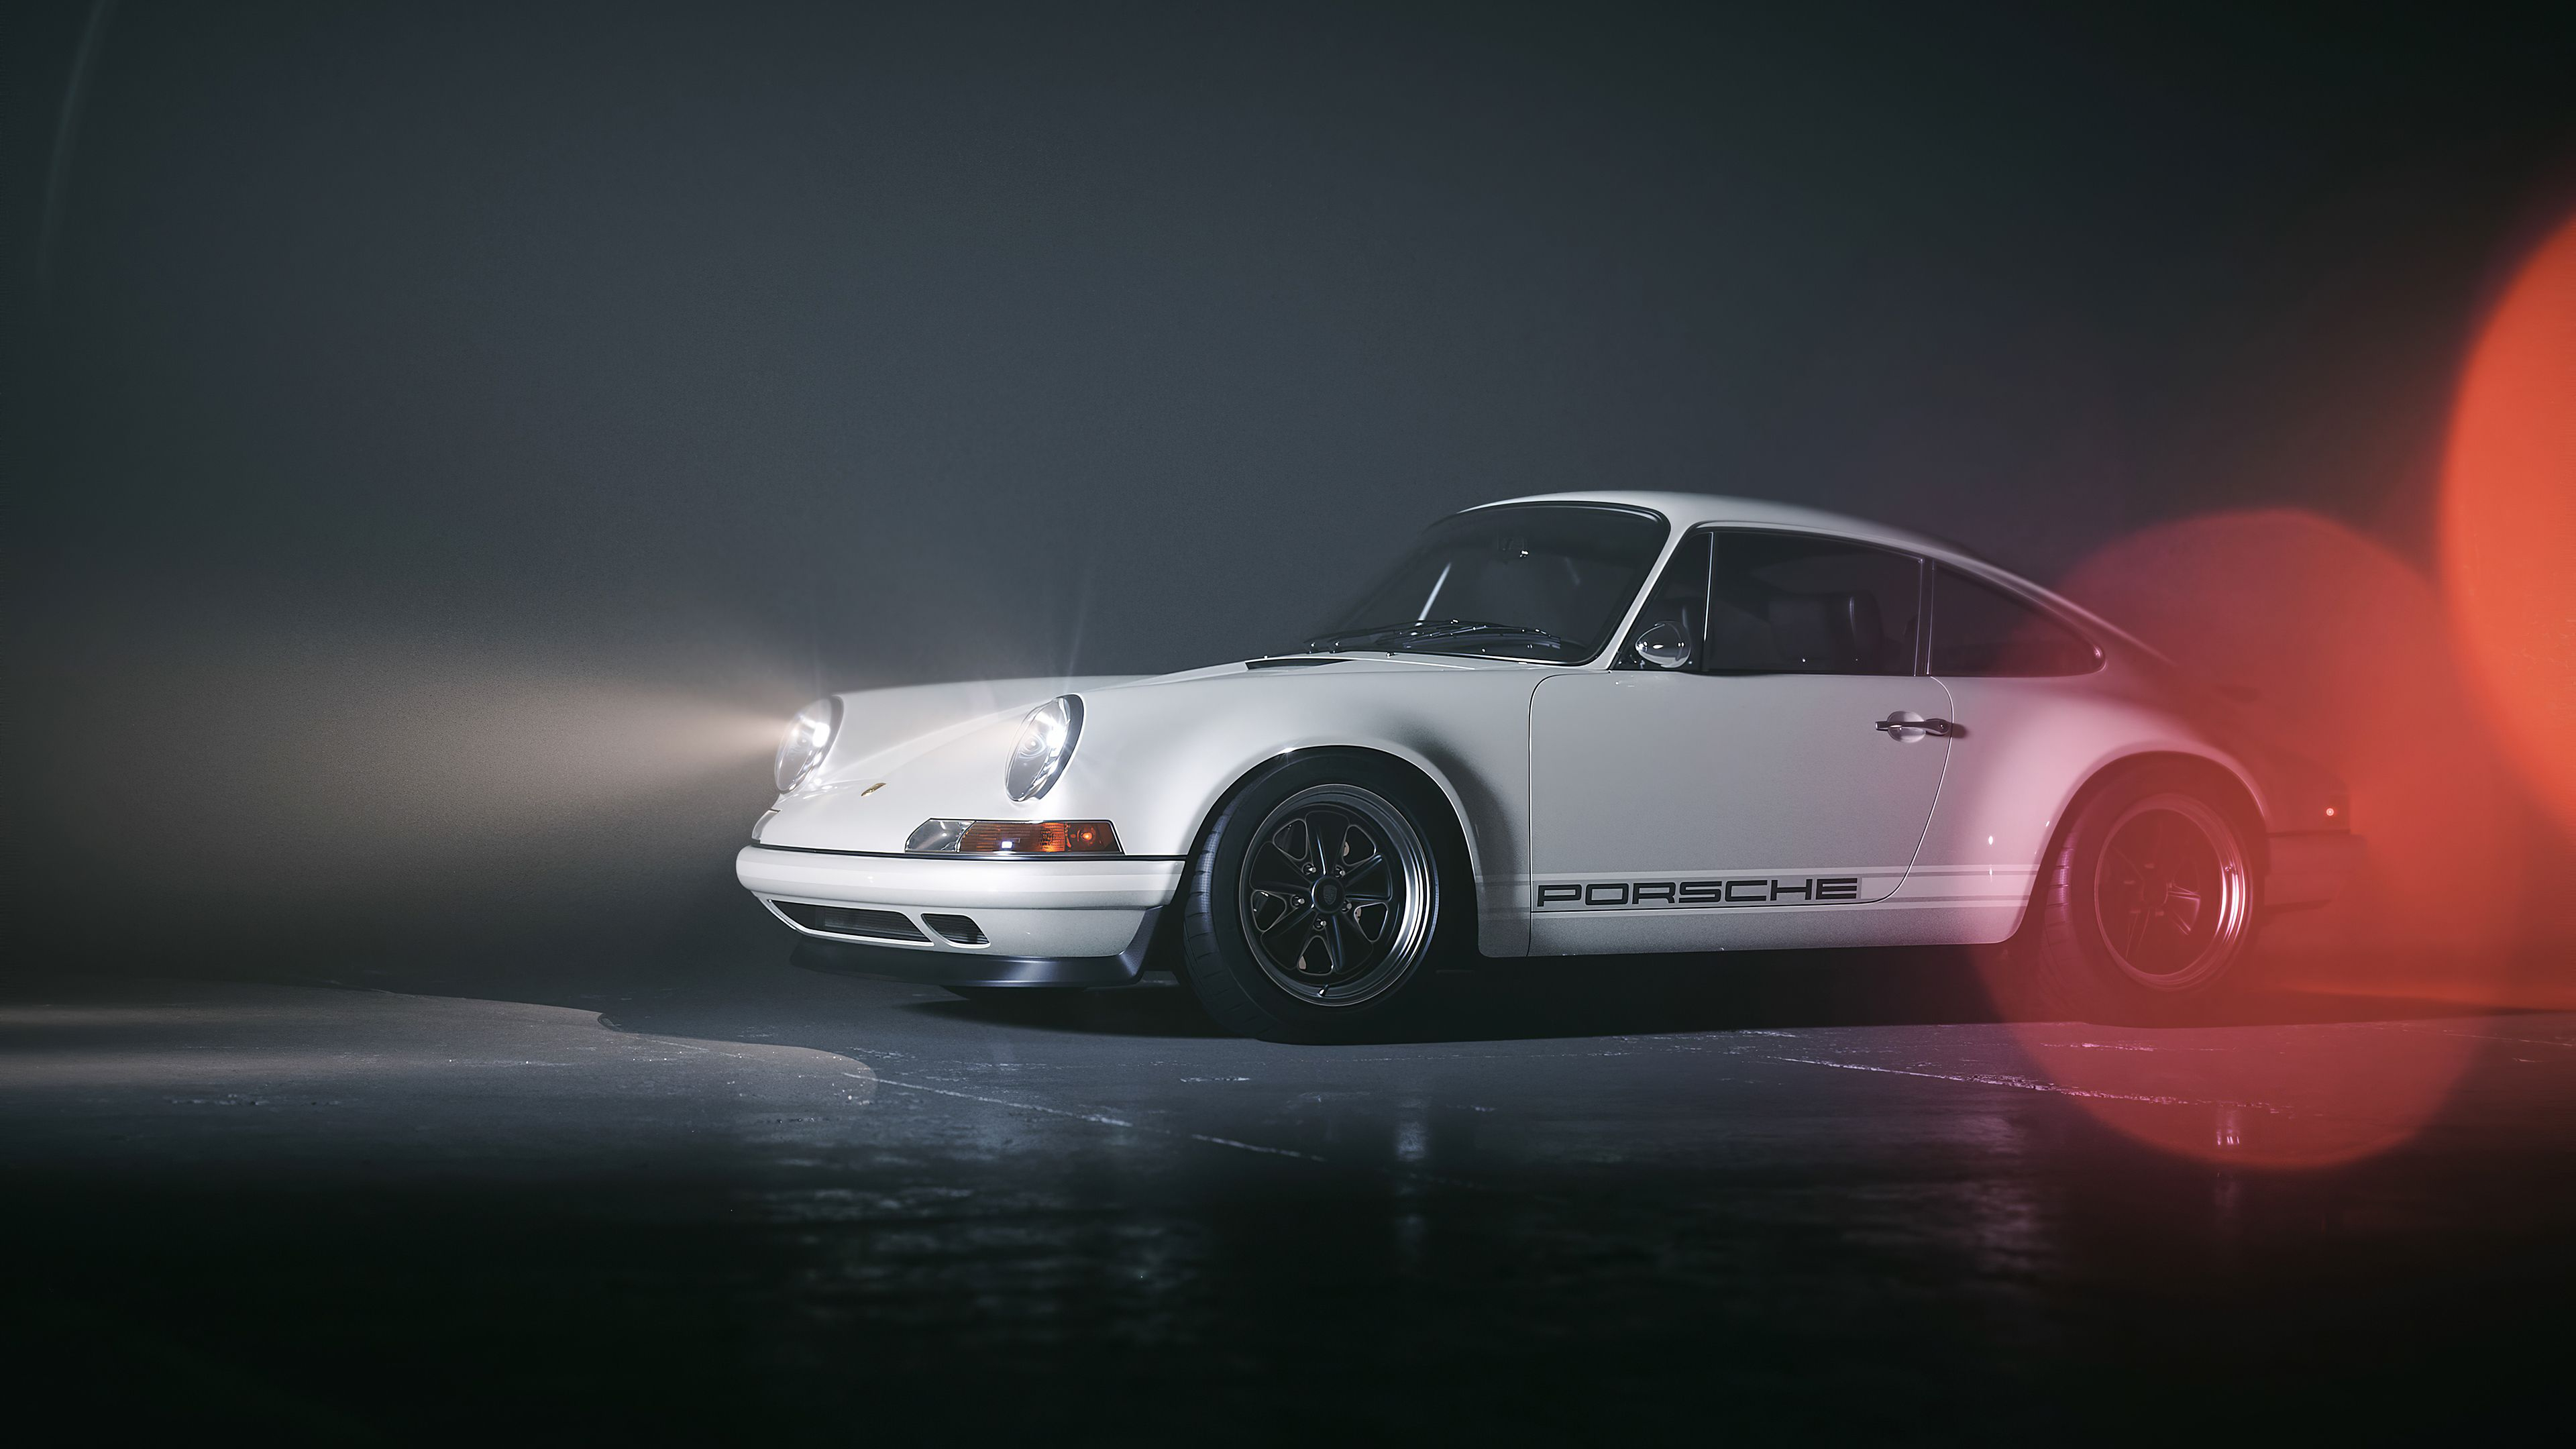 3840x2160 White Porsche porsche wallpapers, hd-wallpapers, cars wallpapers, behance wallpapers, 4k-wallpapers | Porsche, Car wallpapers, Bugatti wallpapers